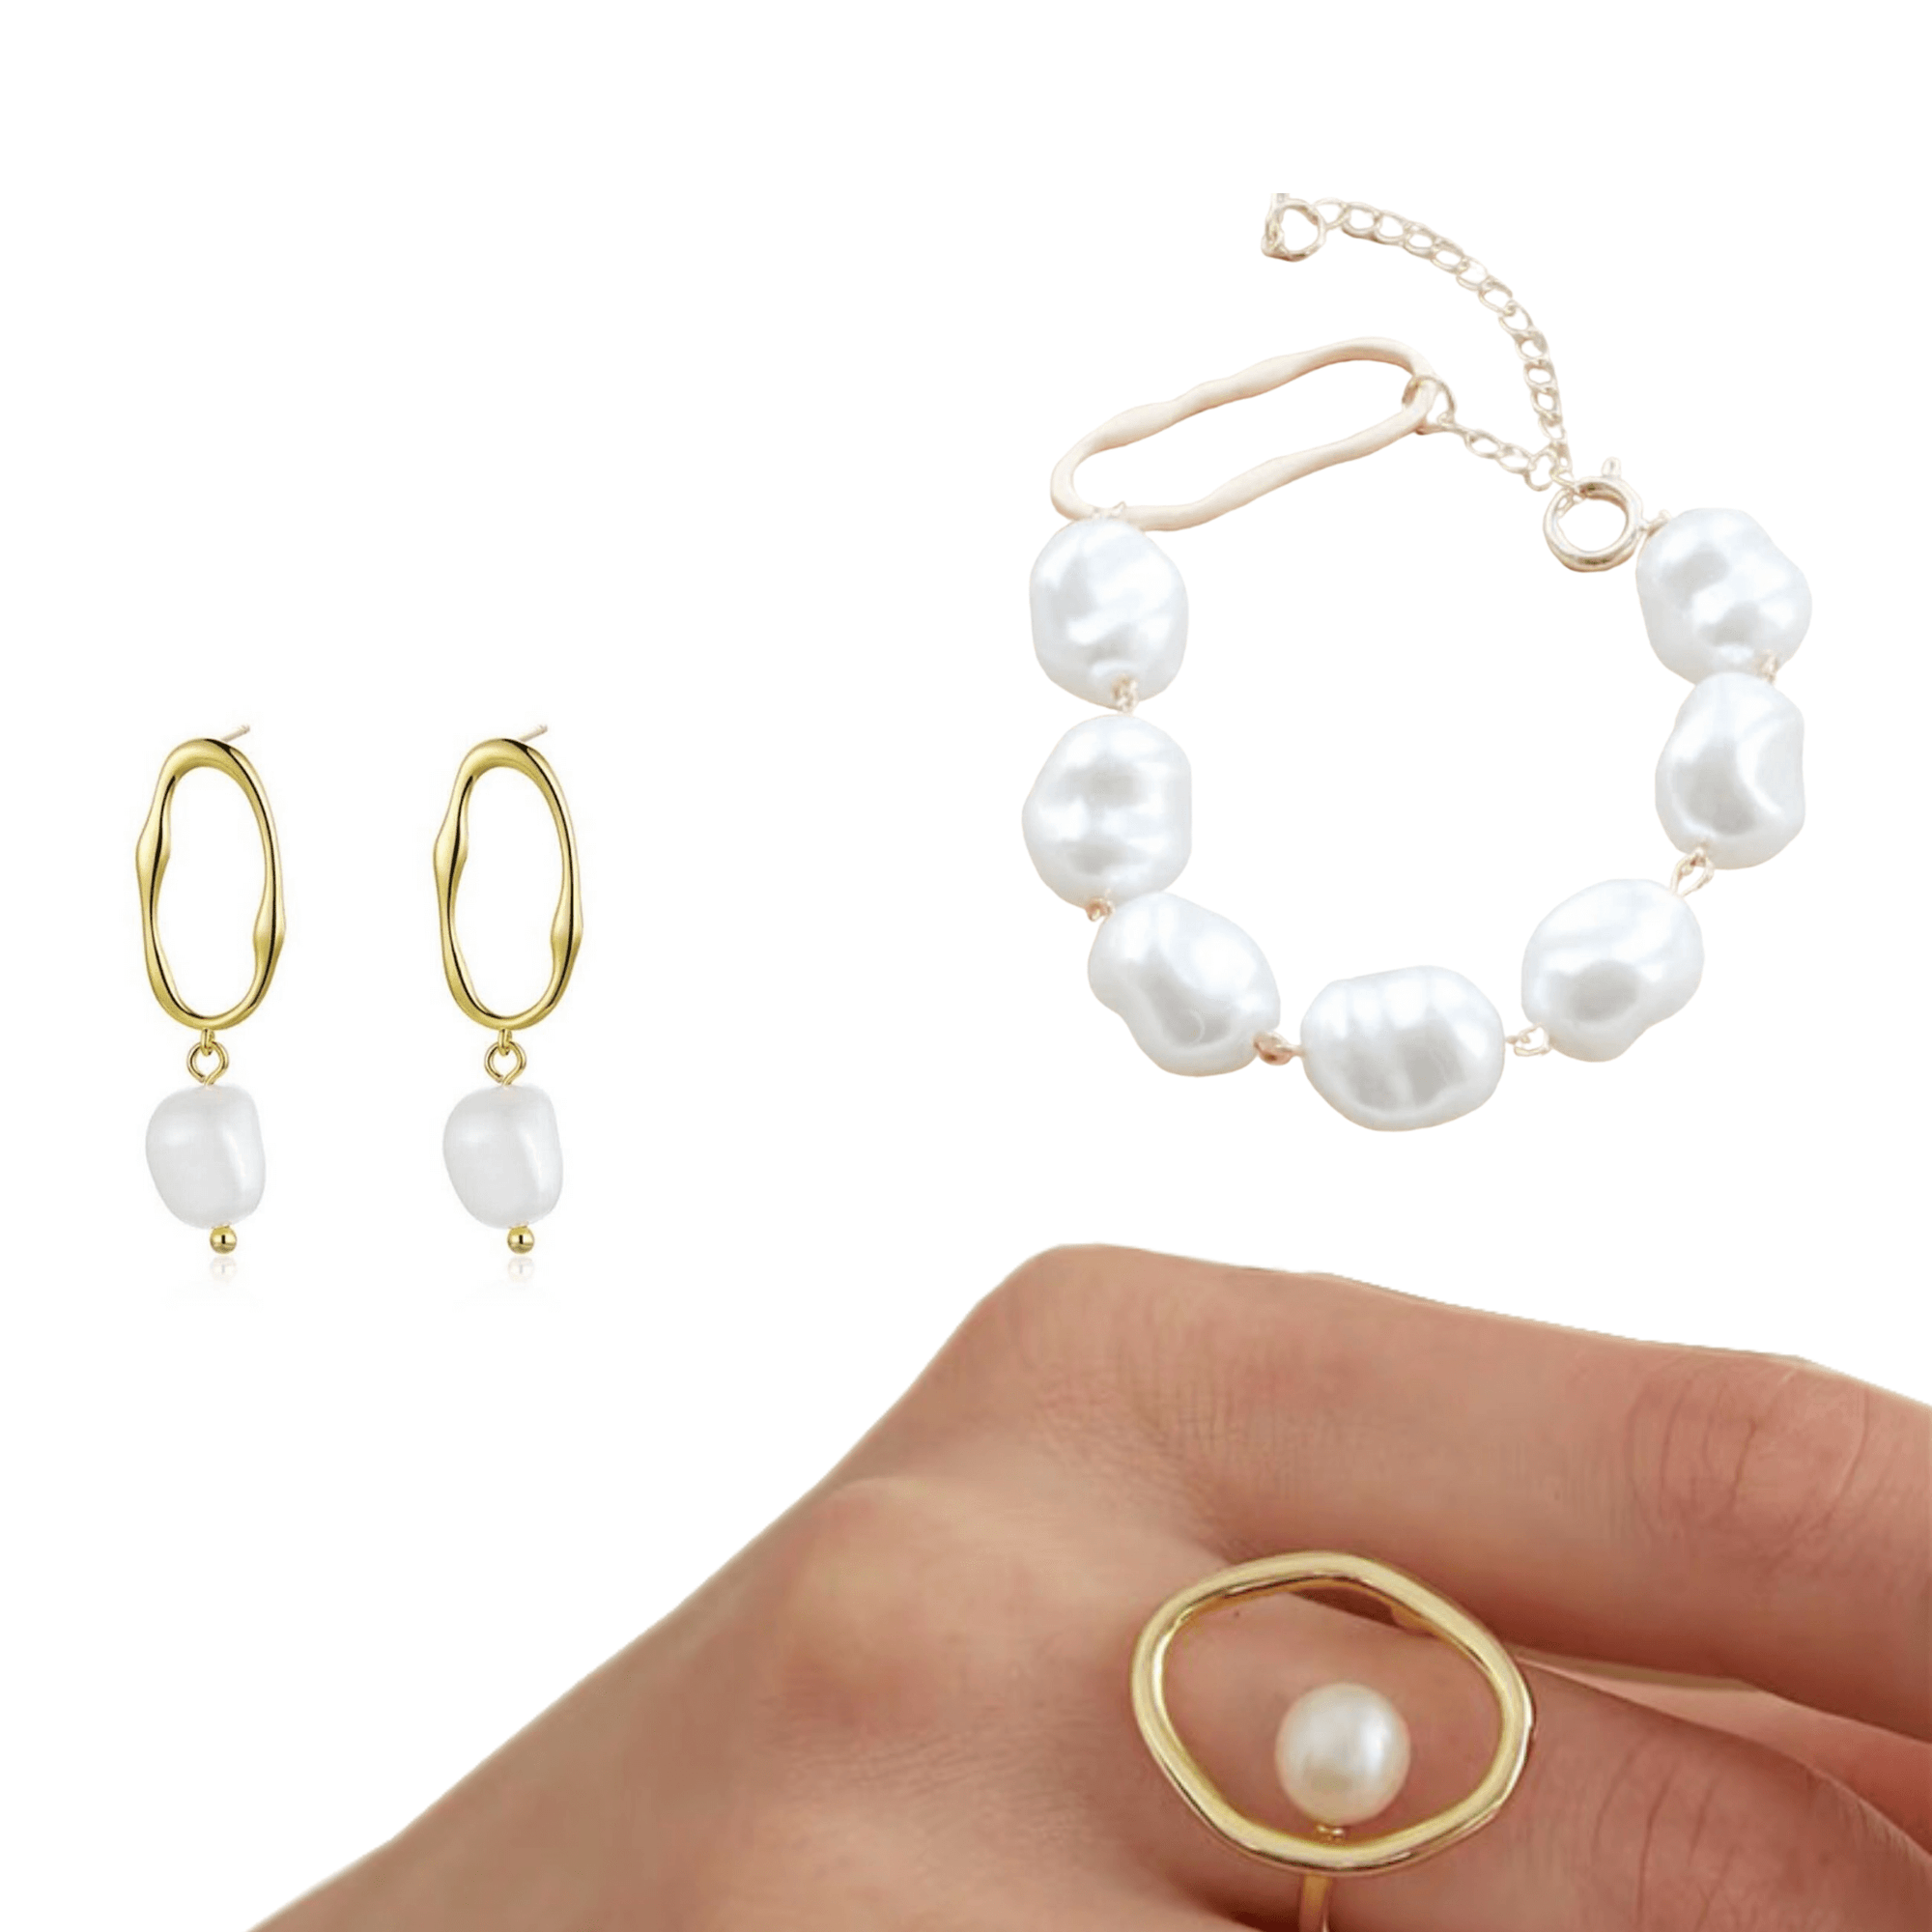  Pearl Bracelet & Ring with Matching Earrings Set Amanda 